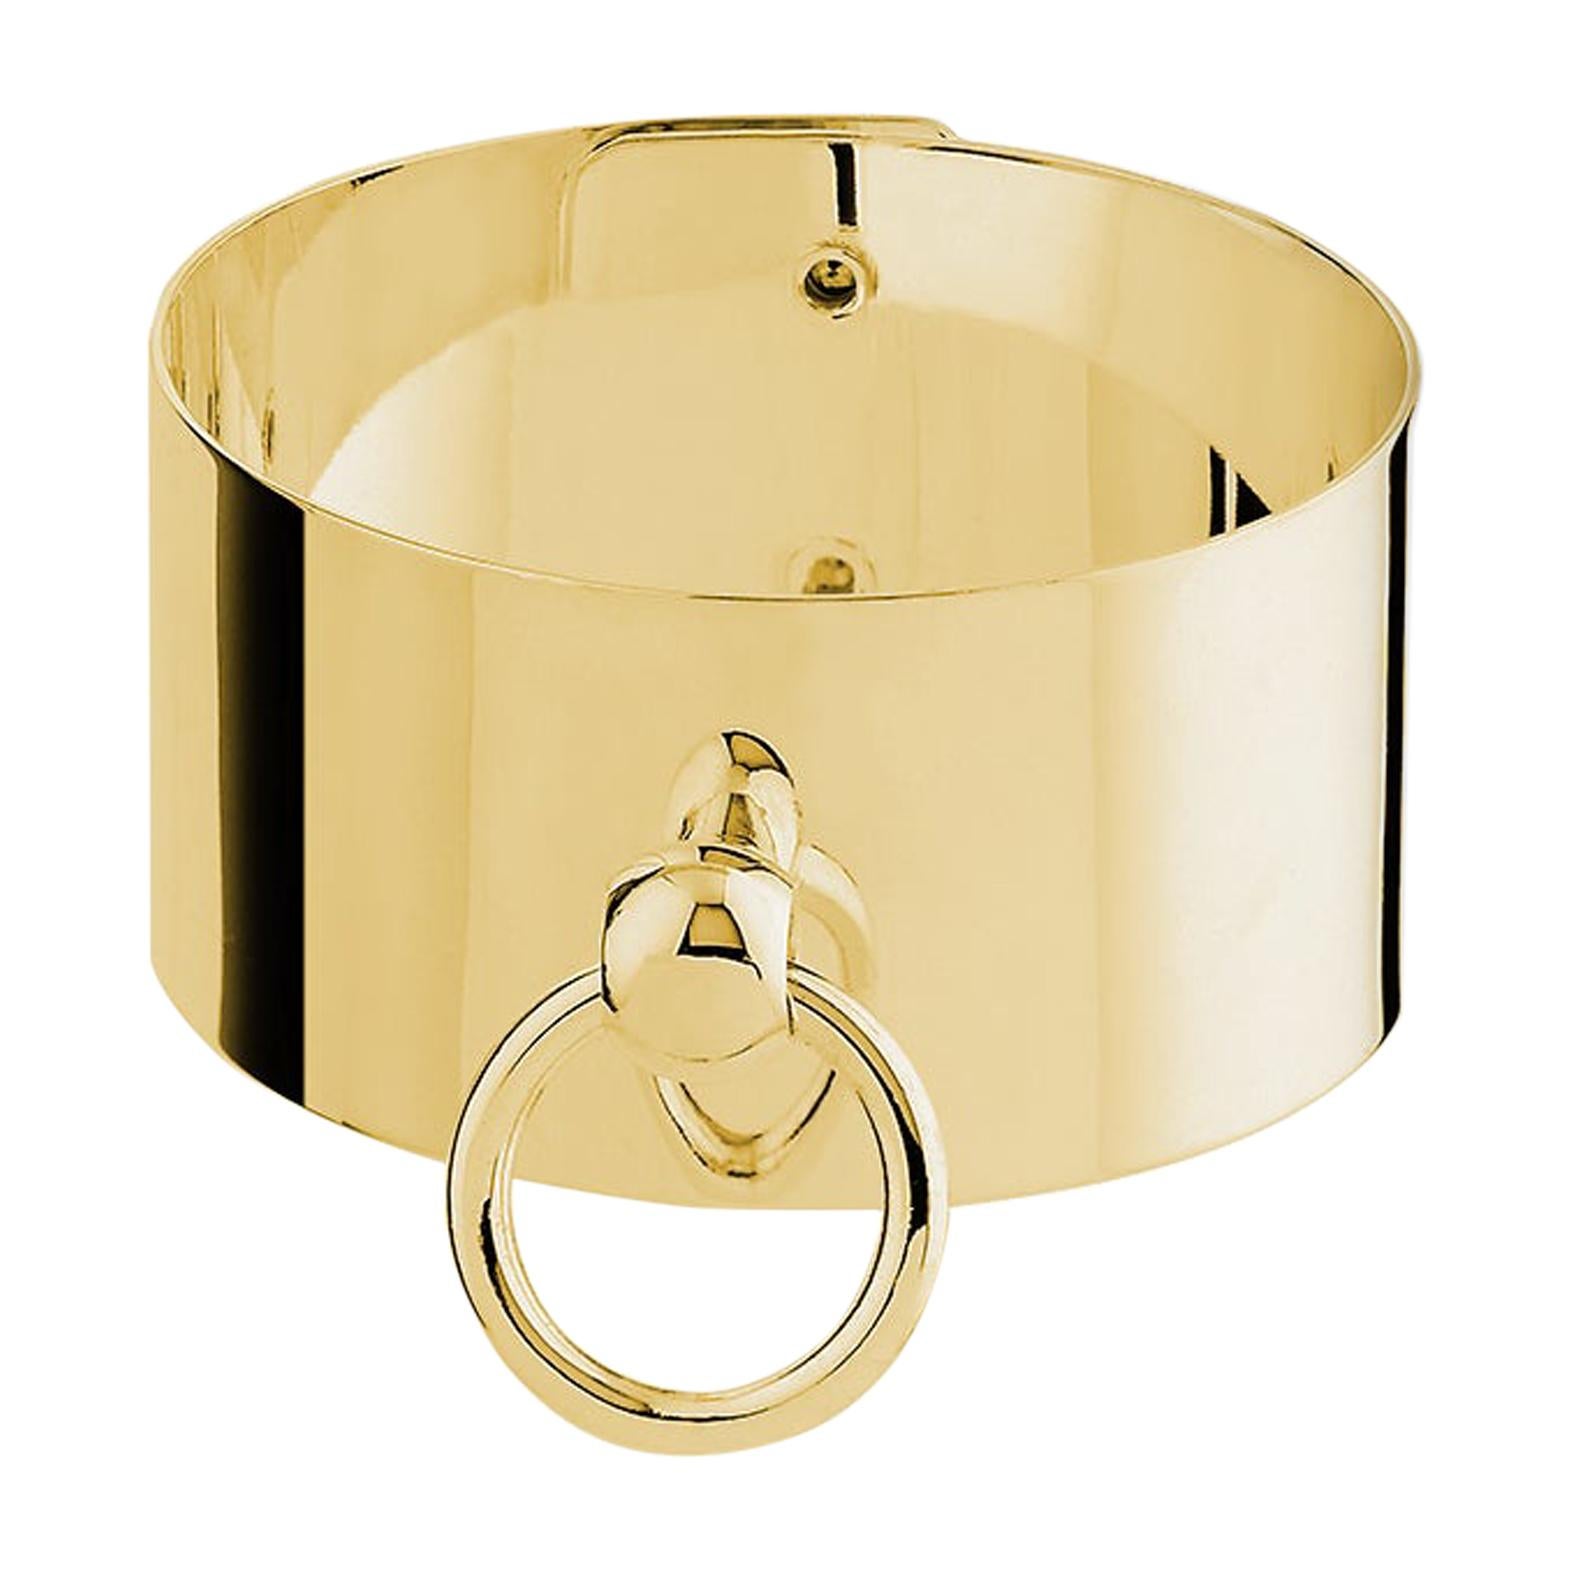 Betony Vernon "O'Ring Wrist Cuff Large" Bracelet 18 Karat Gold